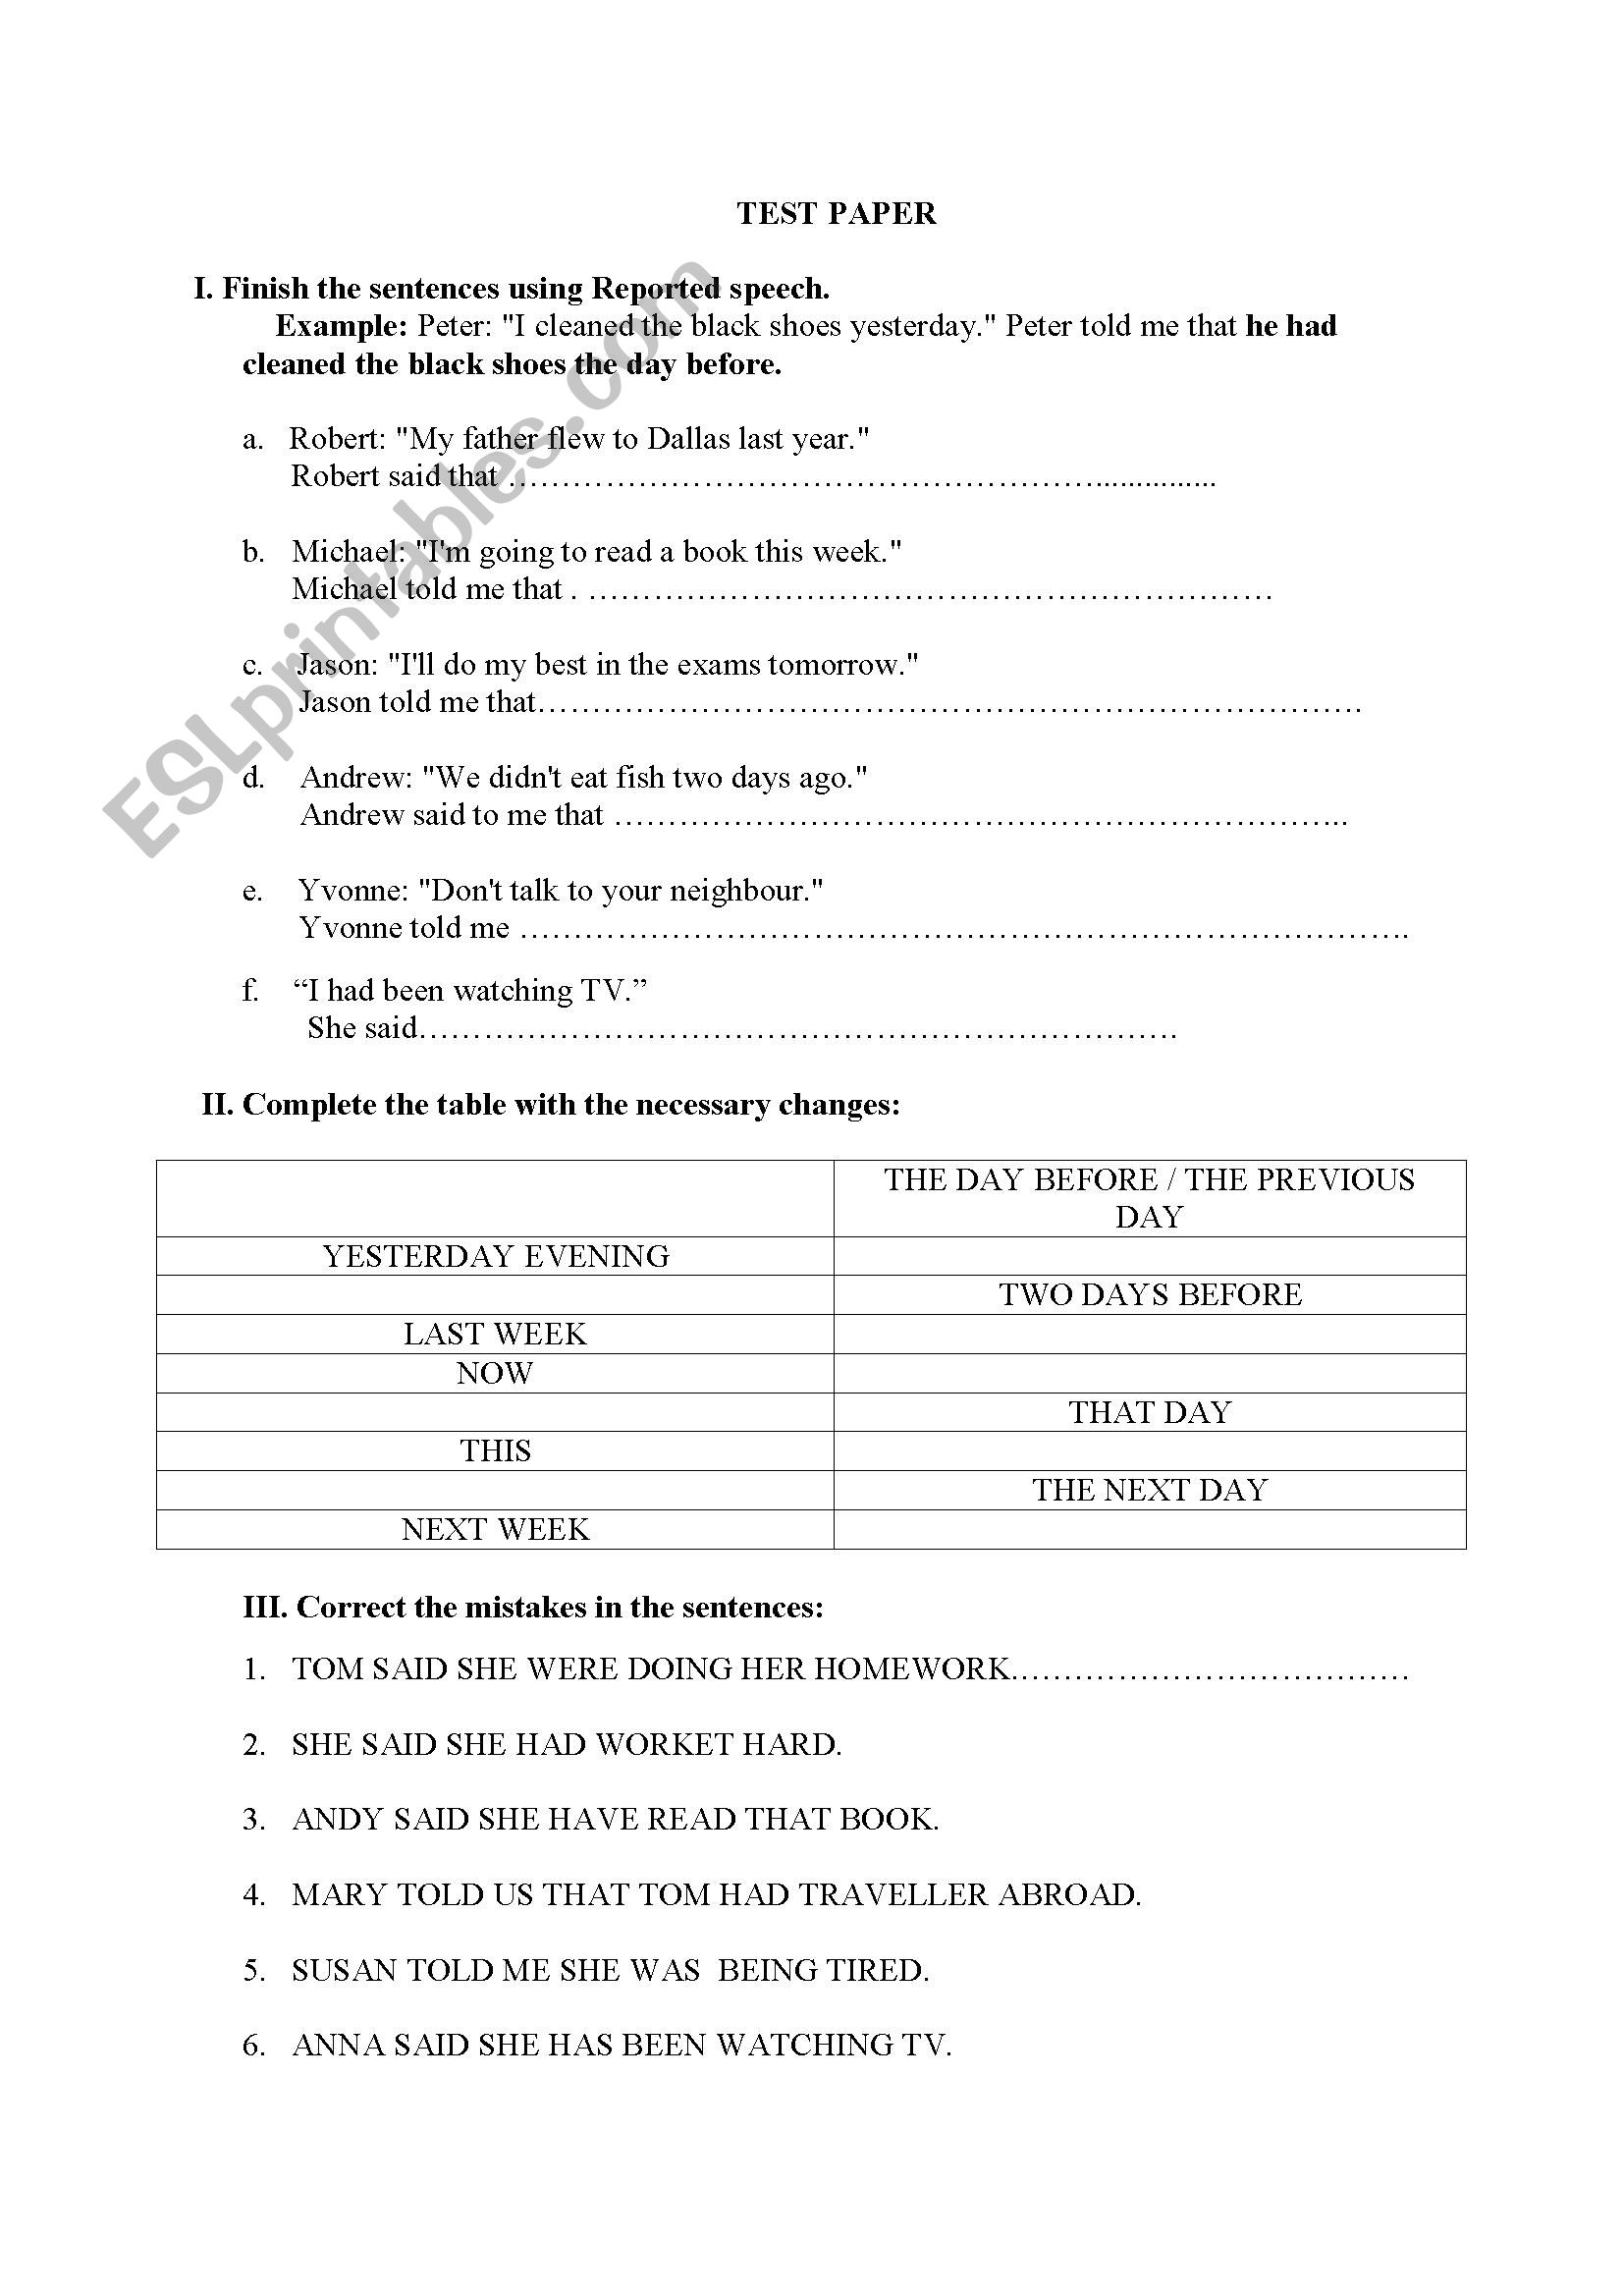 Test paper - Reported speech worksheet